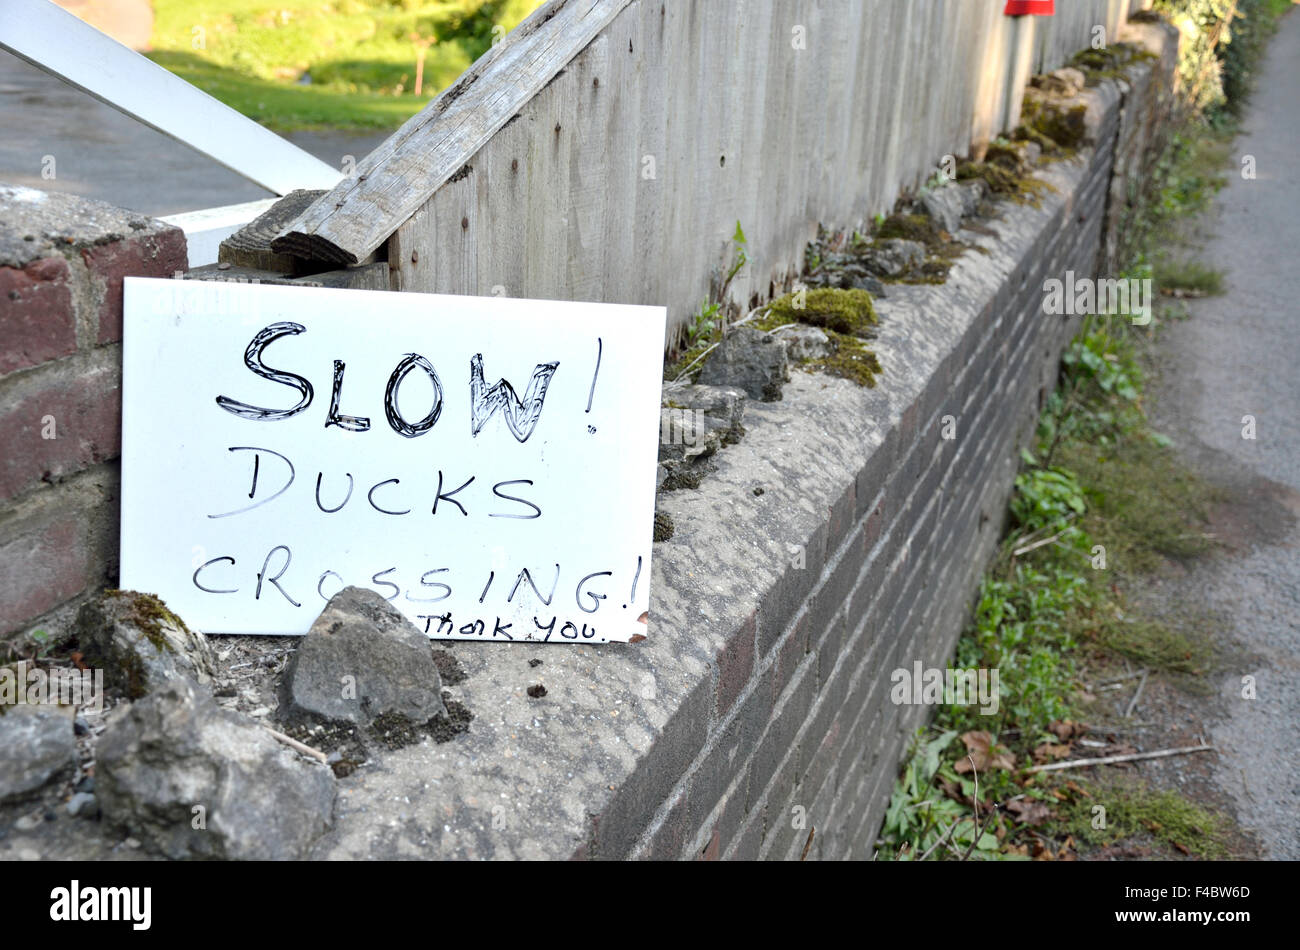 Loose Village, Maidstone, Kent, UK. 'Slow - Ducks Crossing' sign Stock Photo